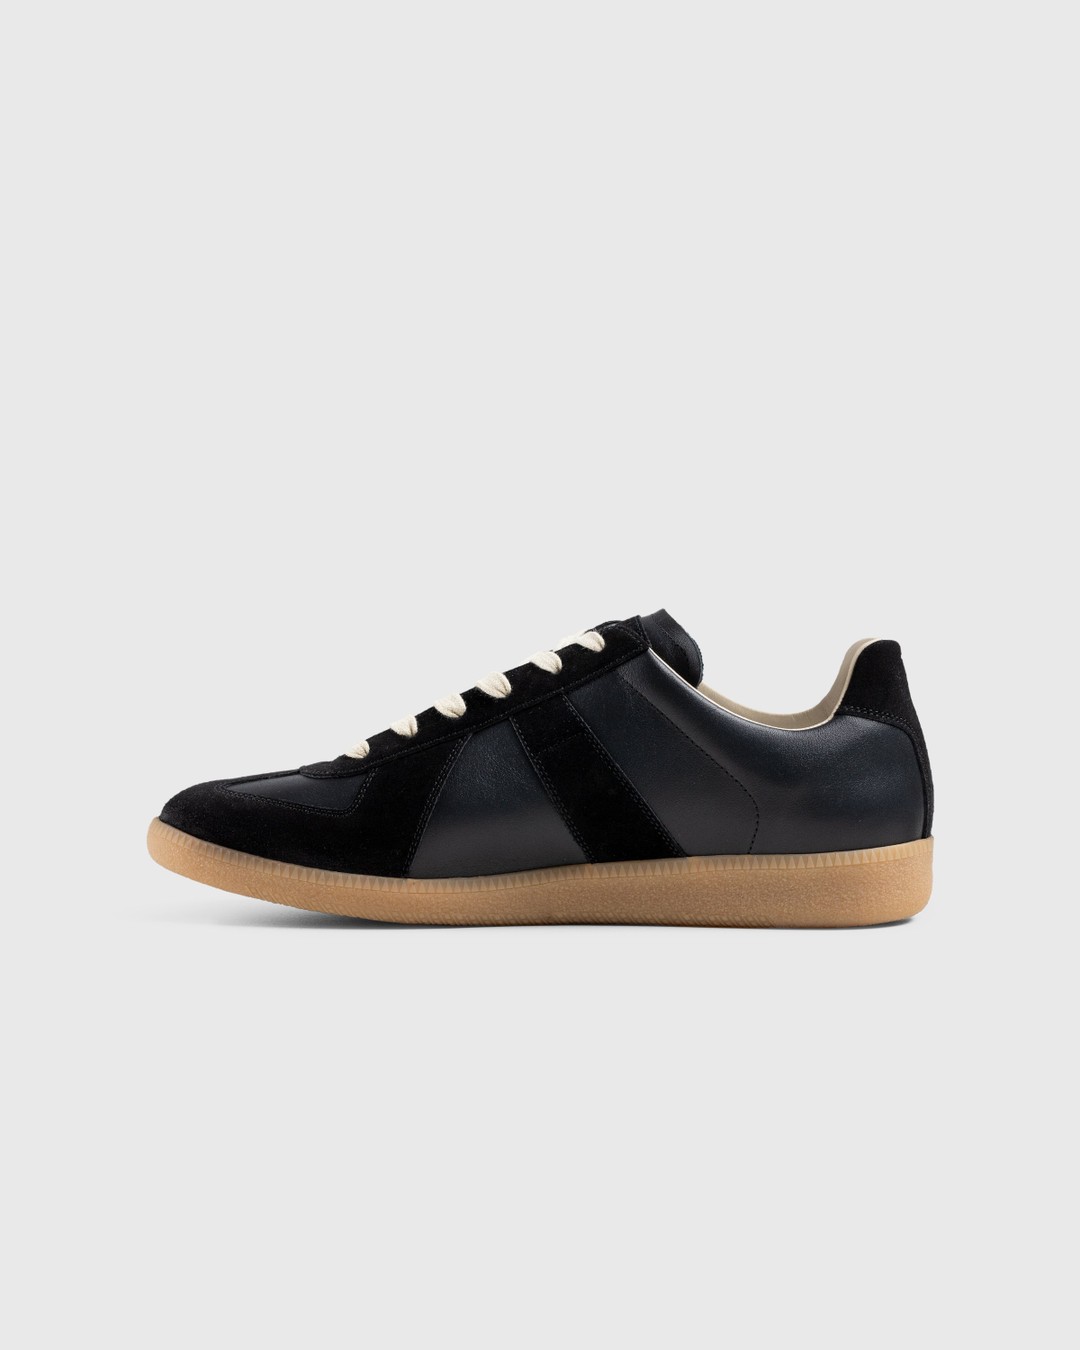 Maison Margiela – Leather Replica Sneakers Black - Low Top Sneakers - Black - Image 2